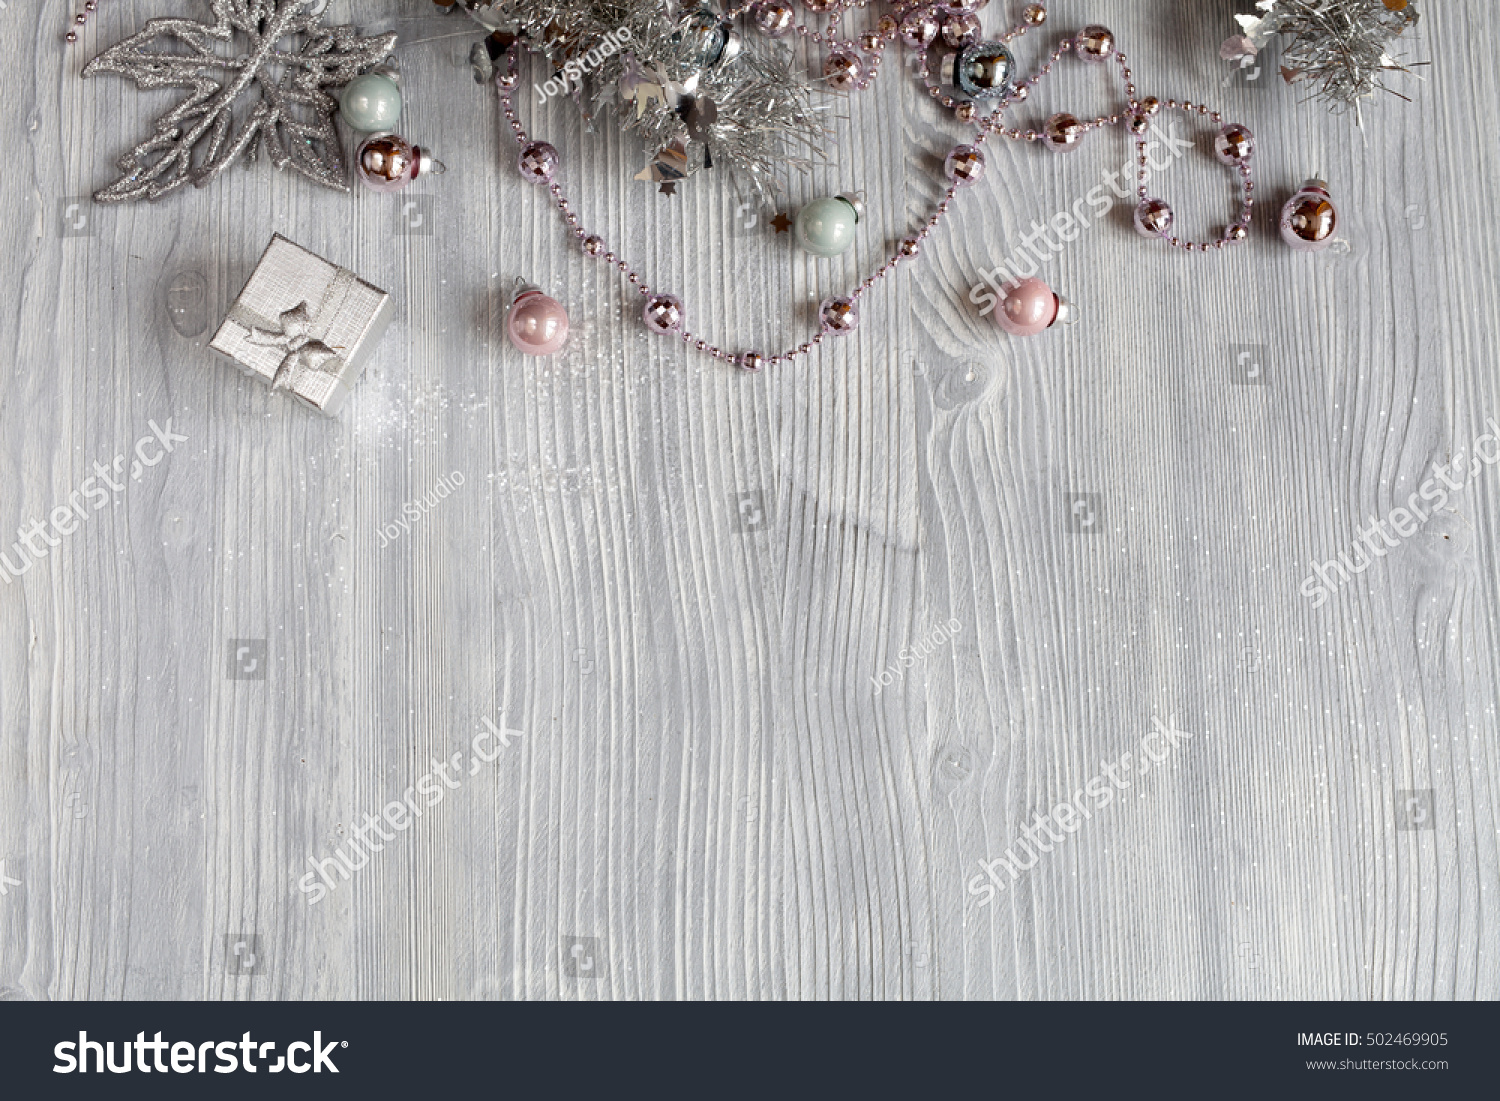 Christmas Backround Stock Photo 502469905 : Shutterstock